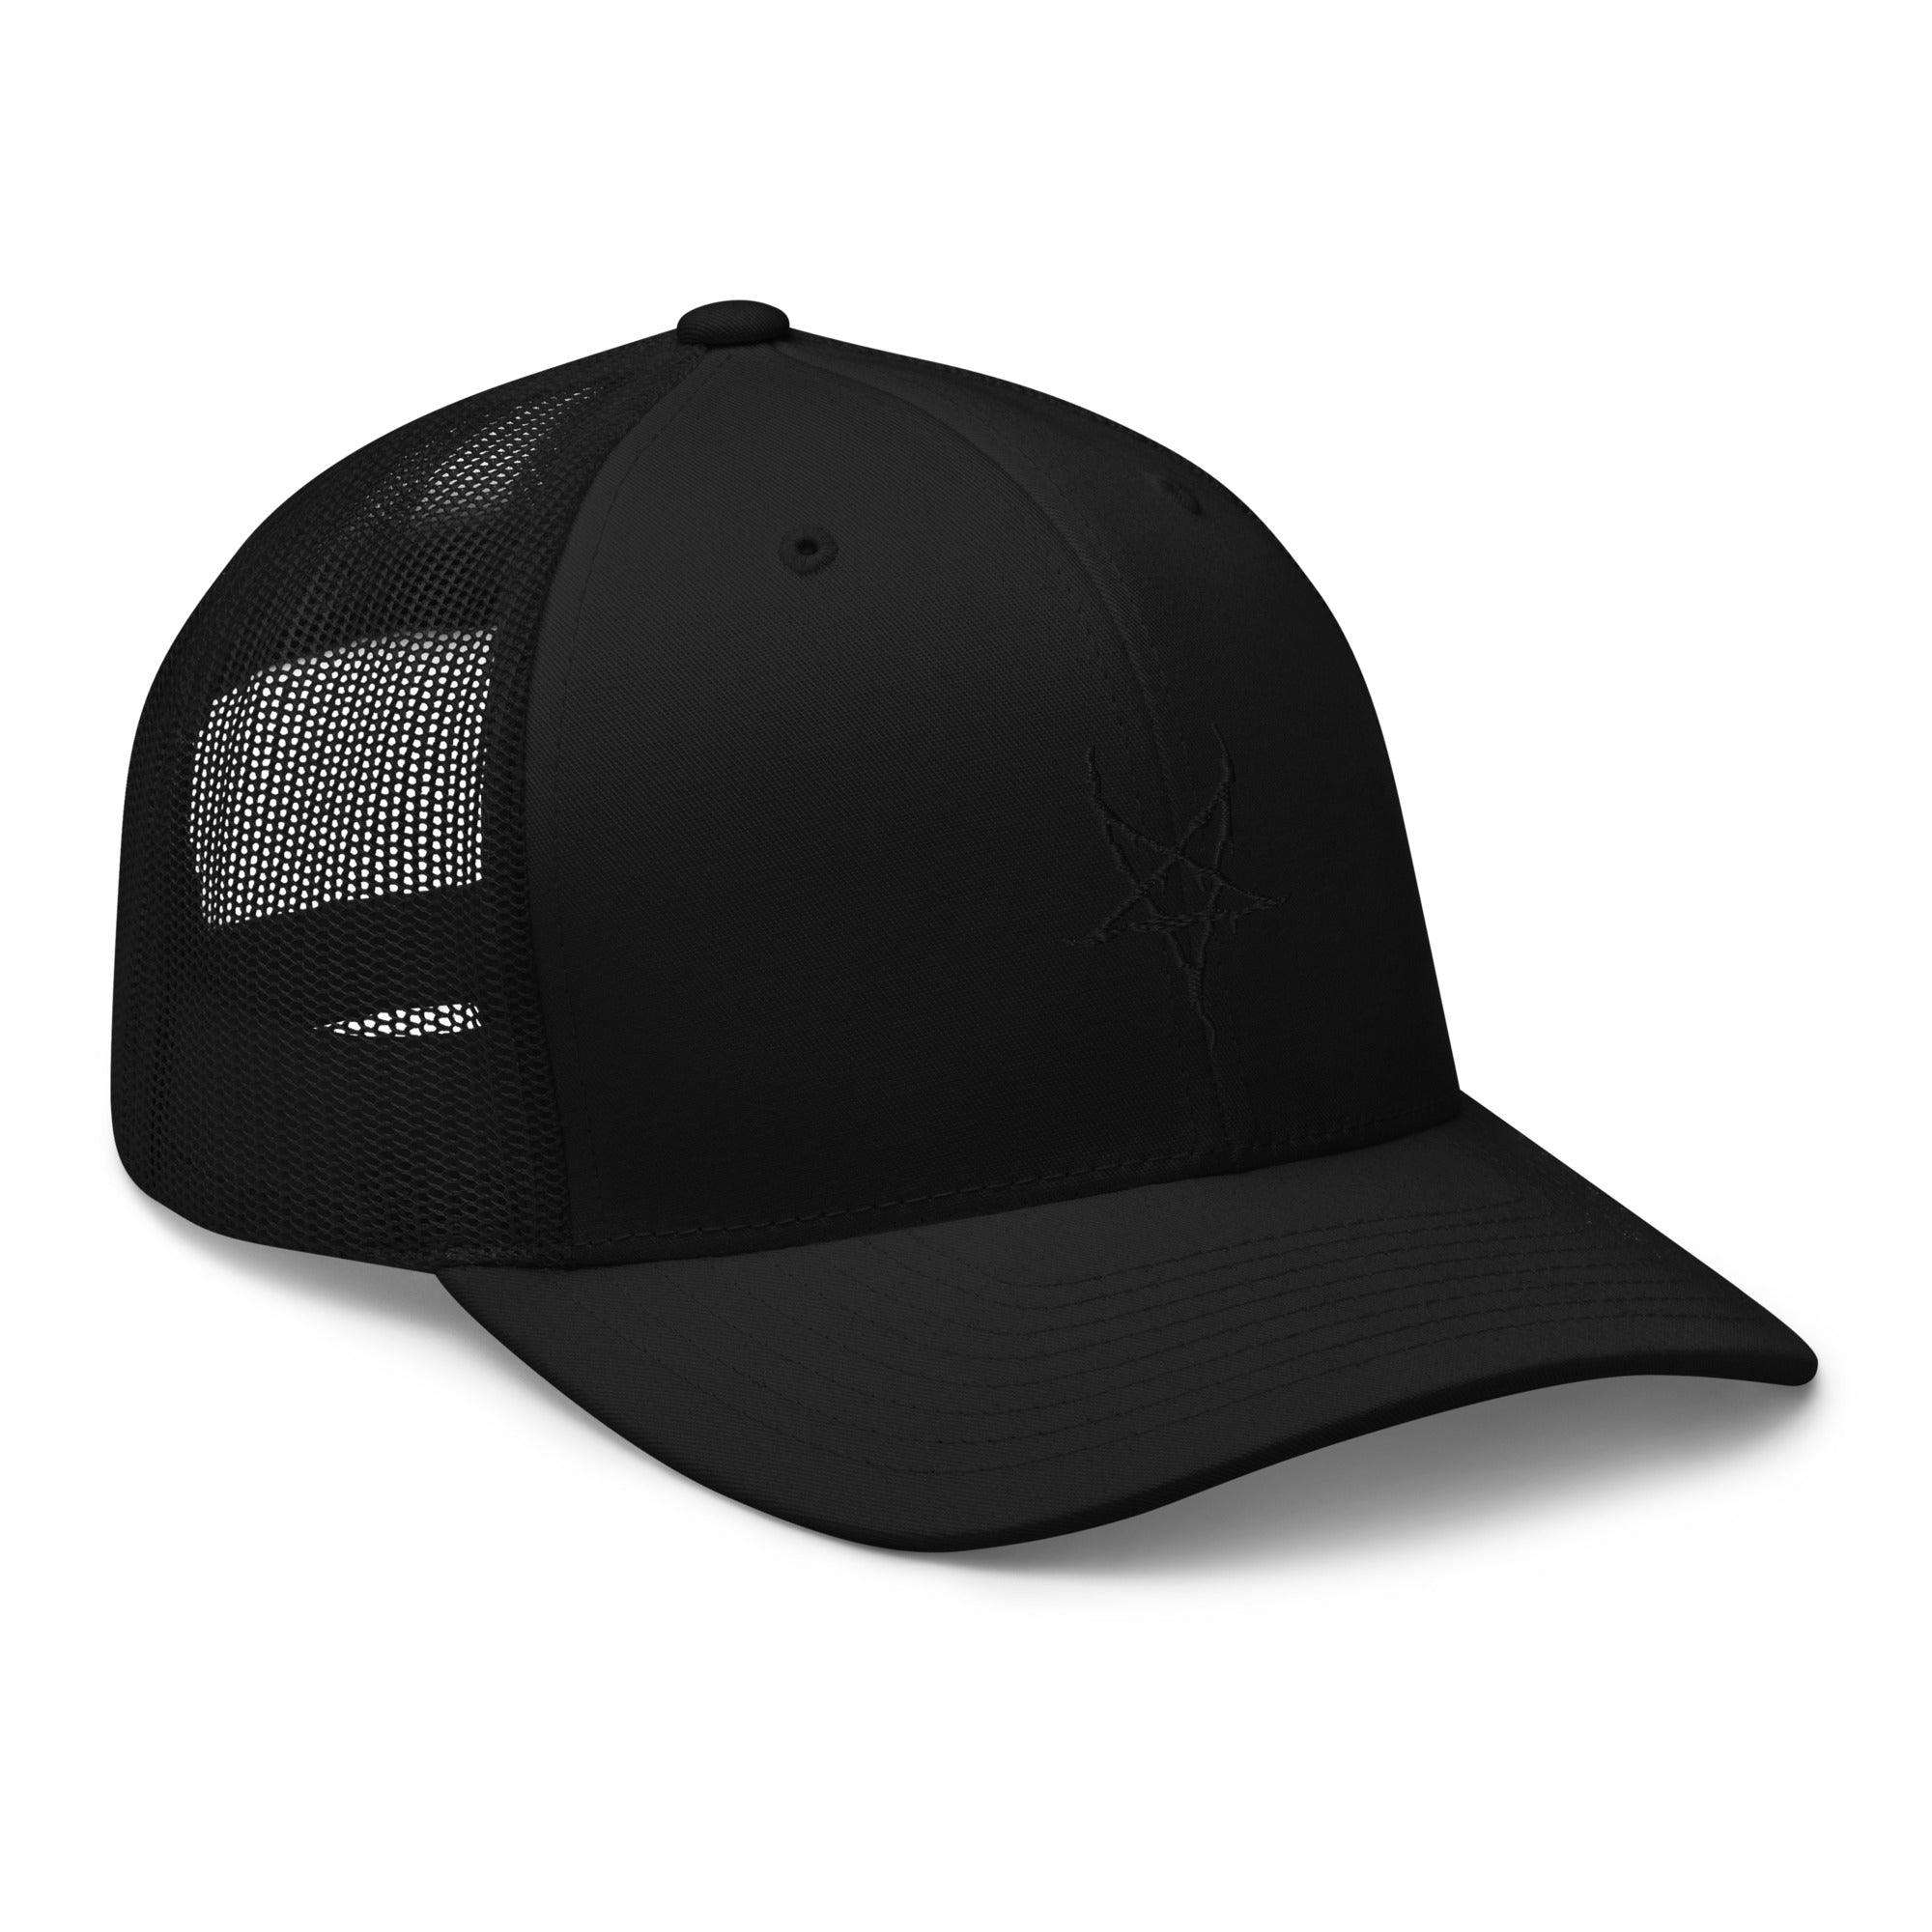 Black Inverted Pentagram Black Metal Style Embroidered Trucker Cap Snapback Hat